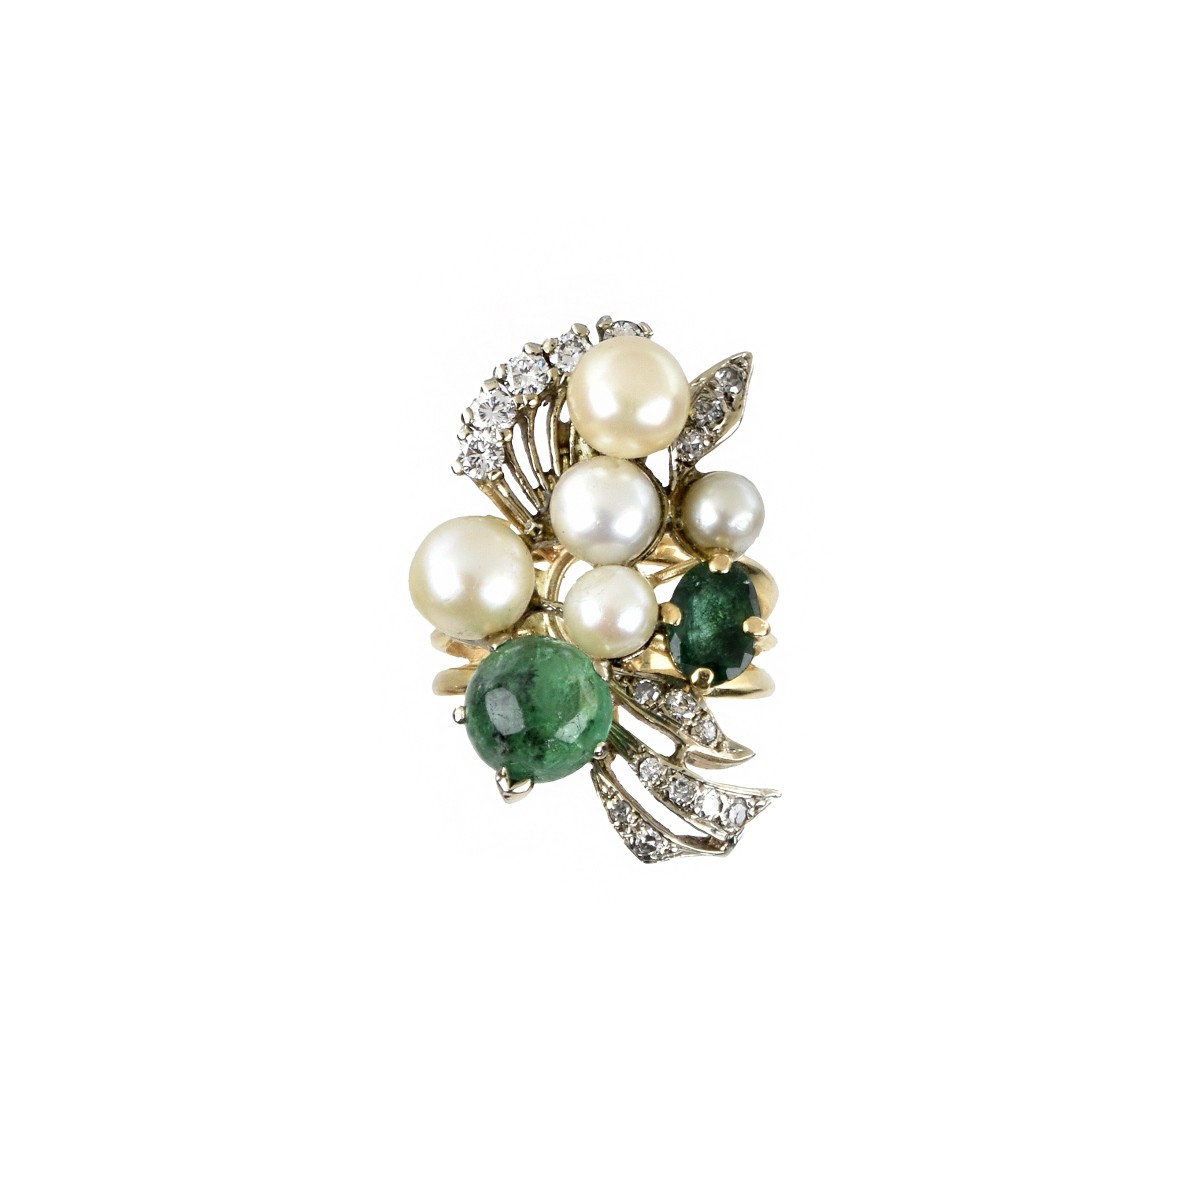 Emerald, Diamond, Pearl and 14K Ring